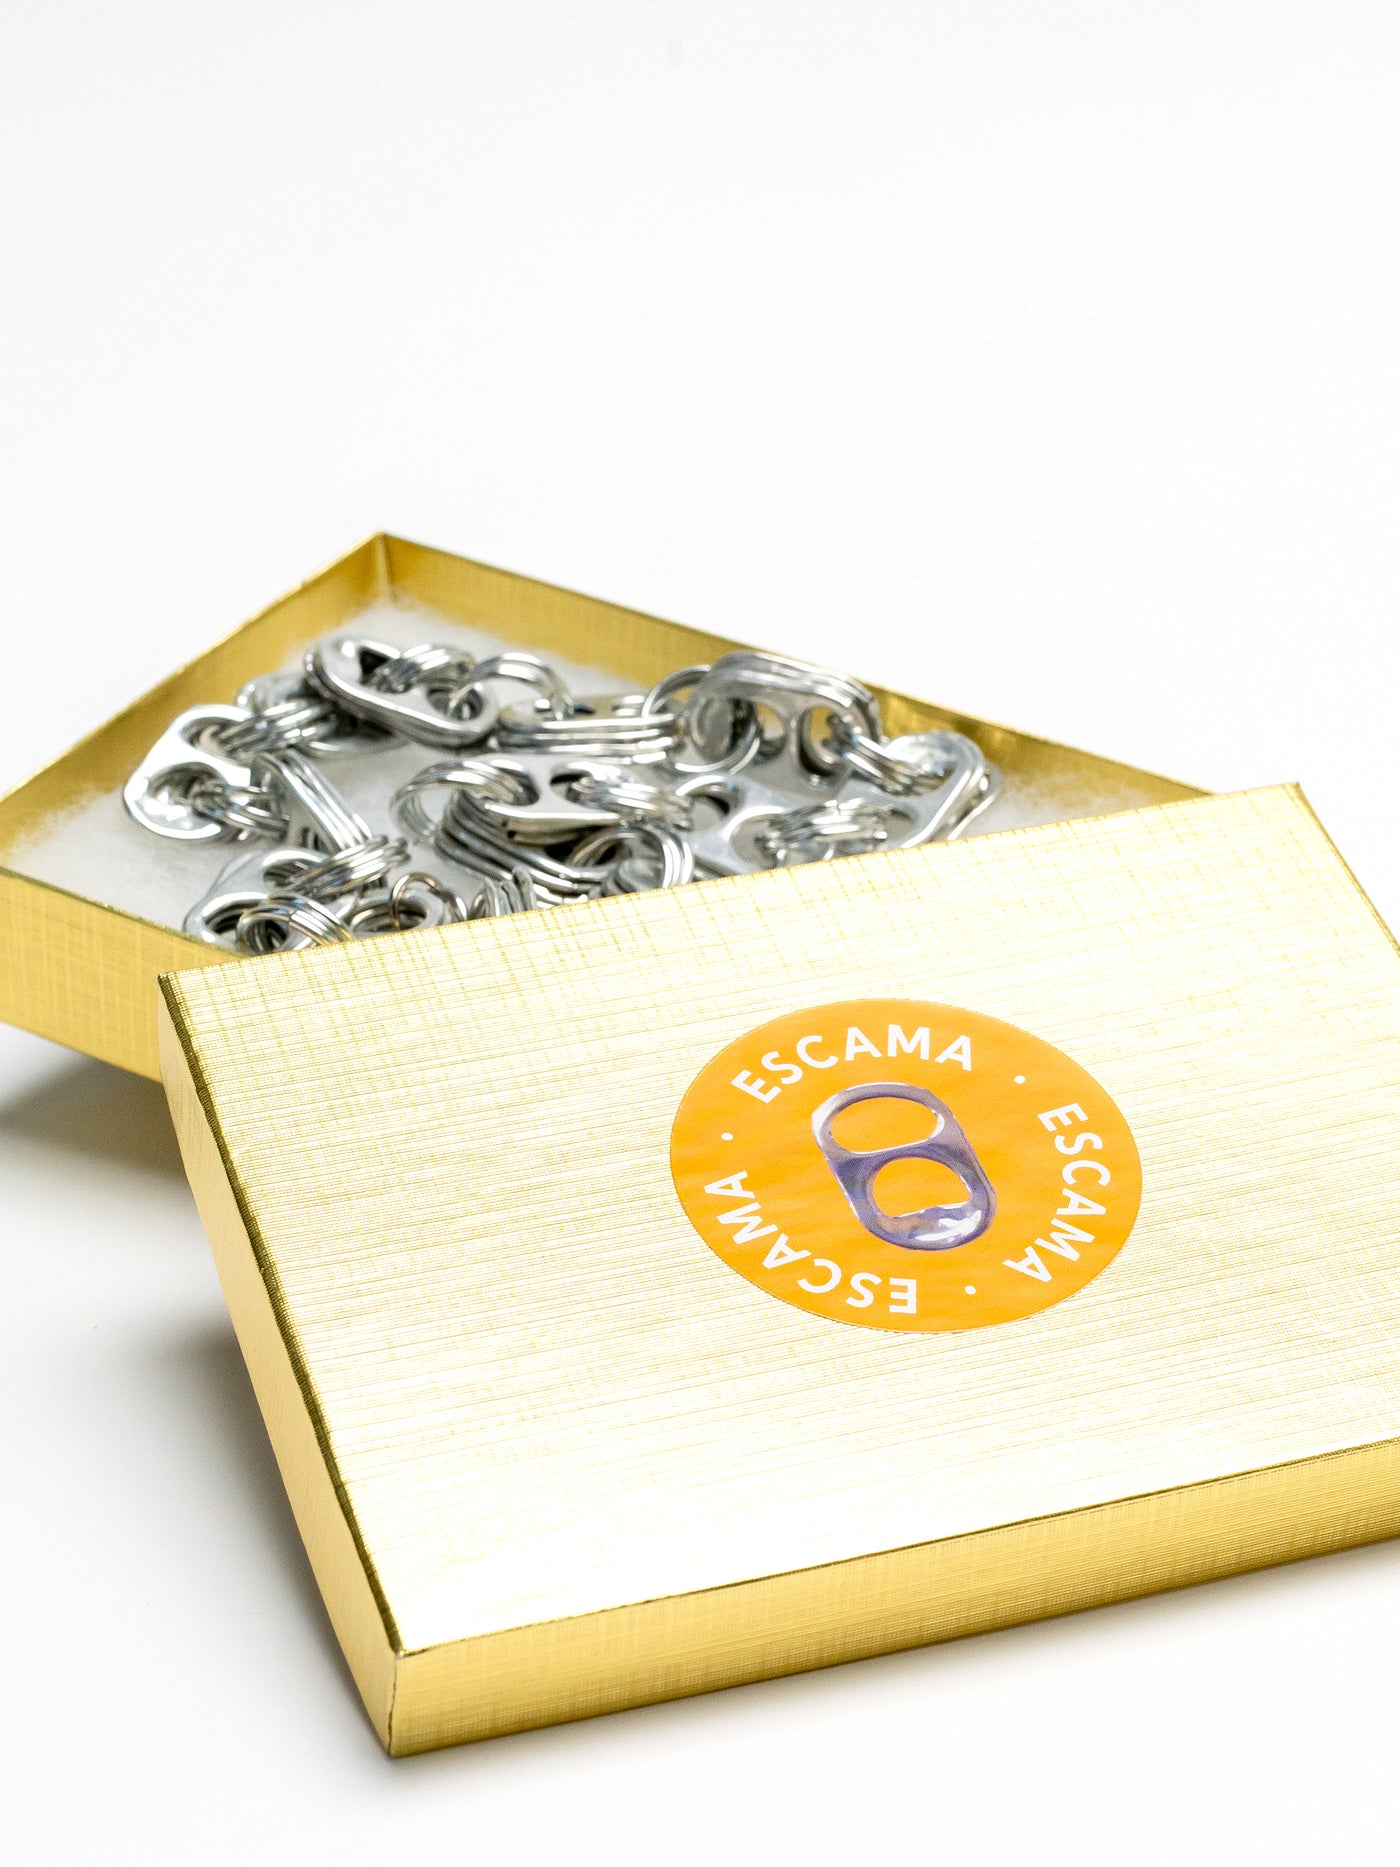 alt="soda tab necklace in gift box - escama studio"